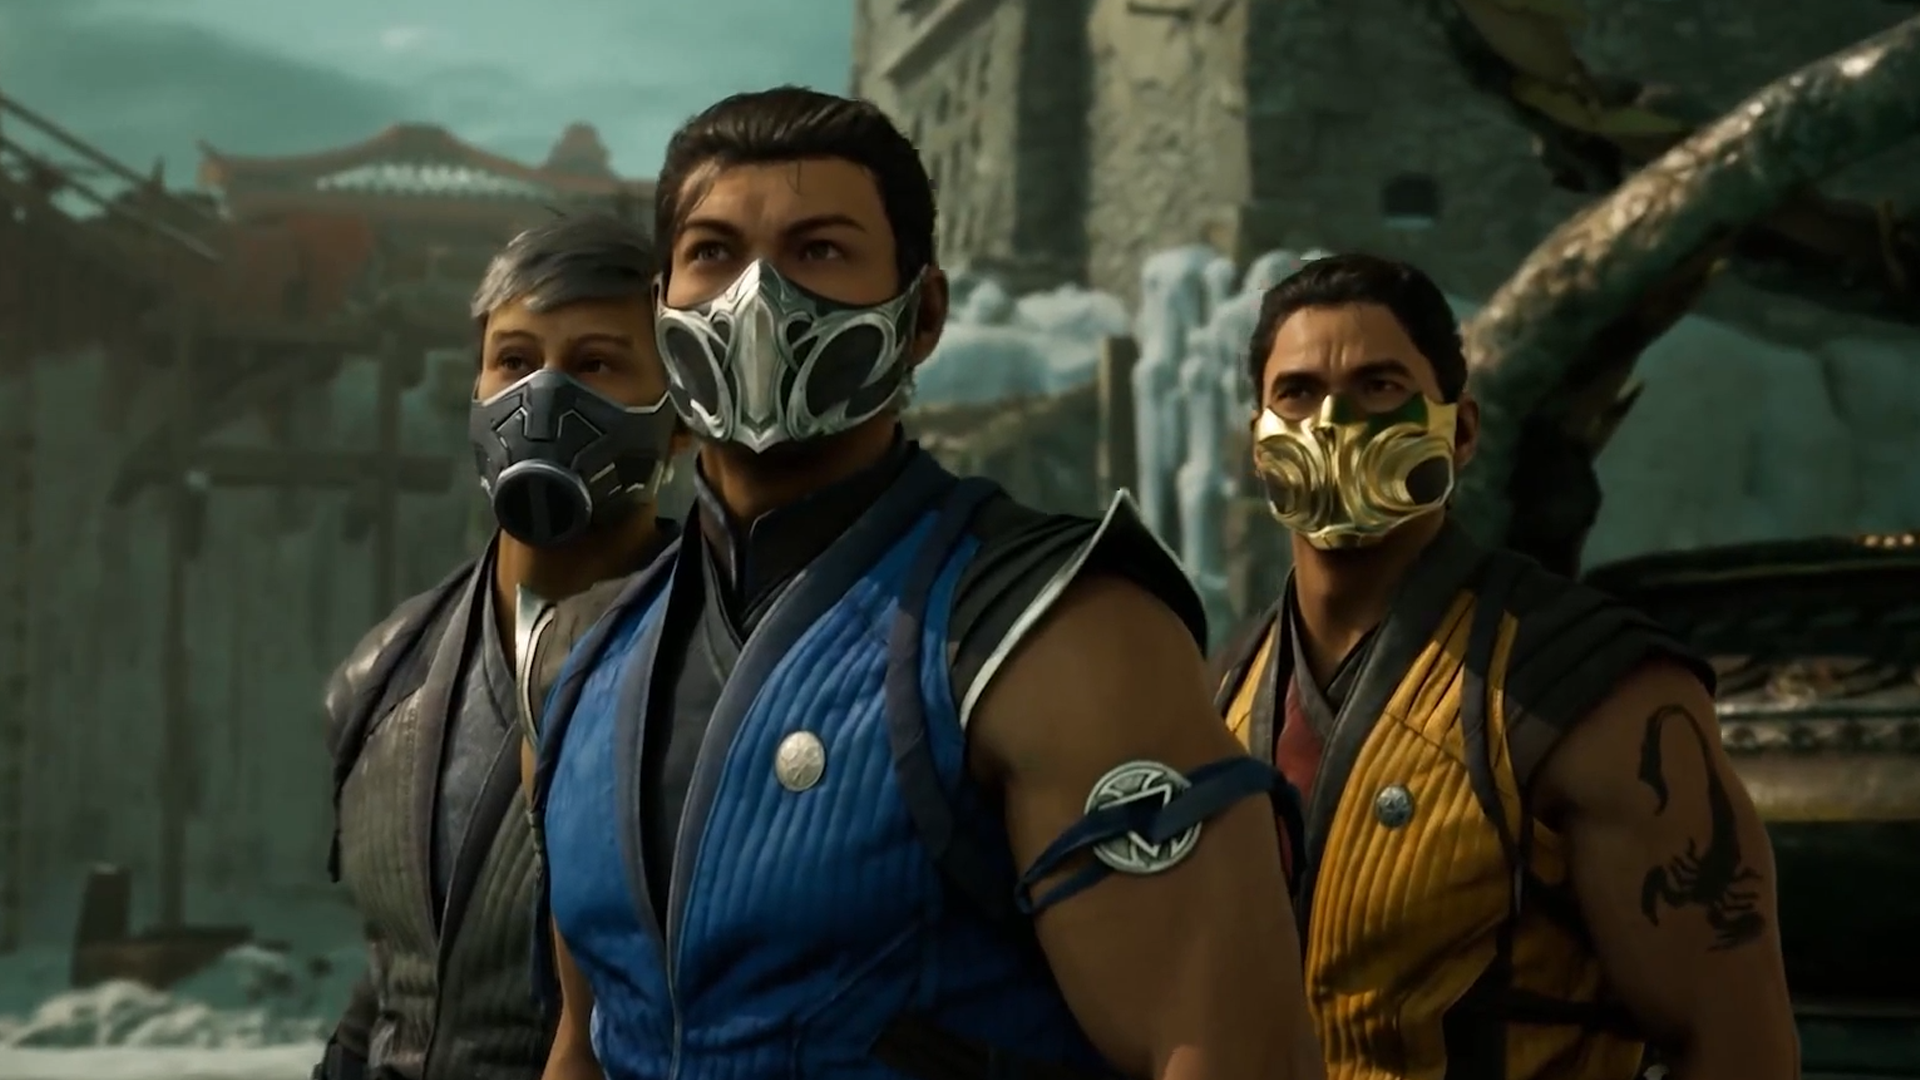 Jogo Mortal Kombat 1 para Xbox Series X